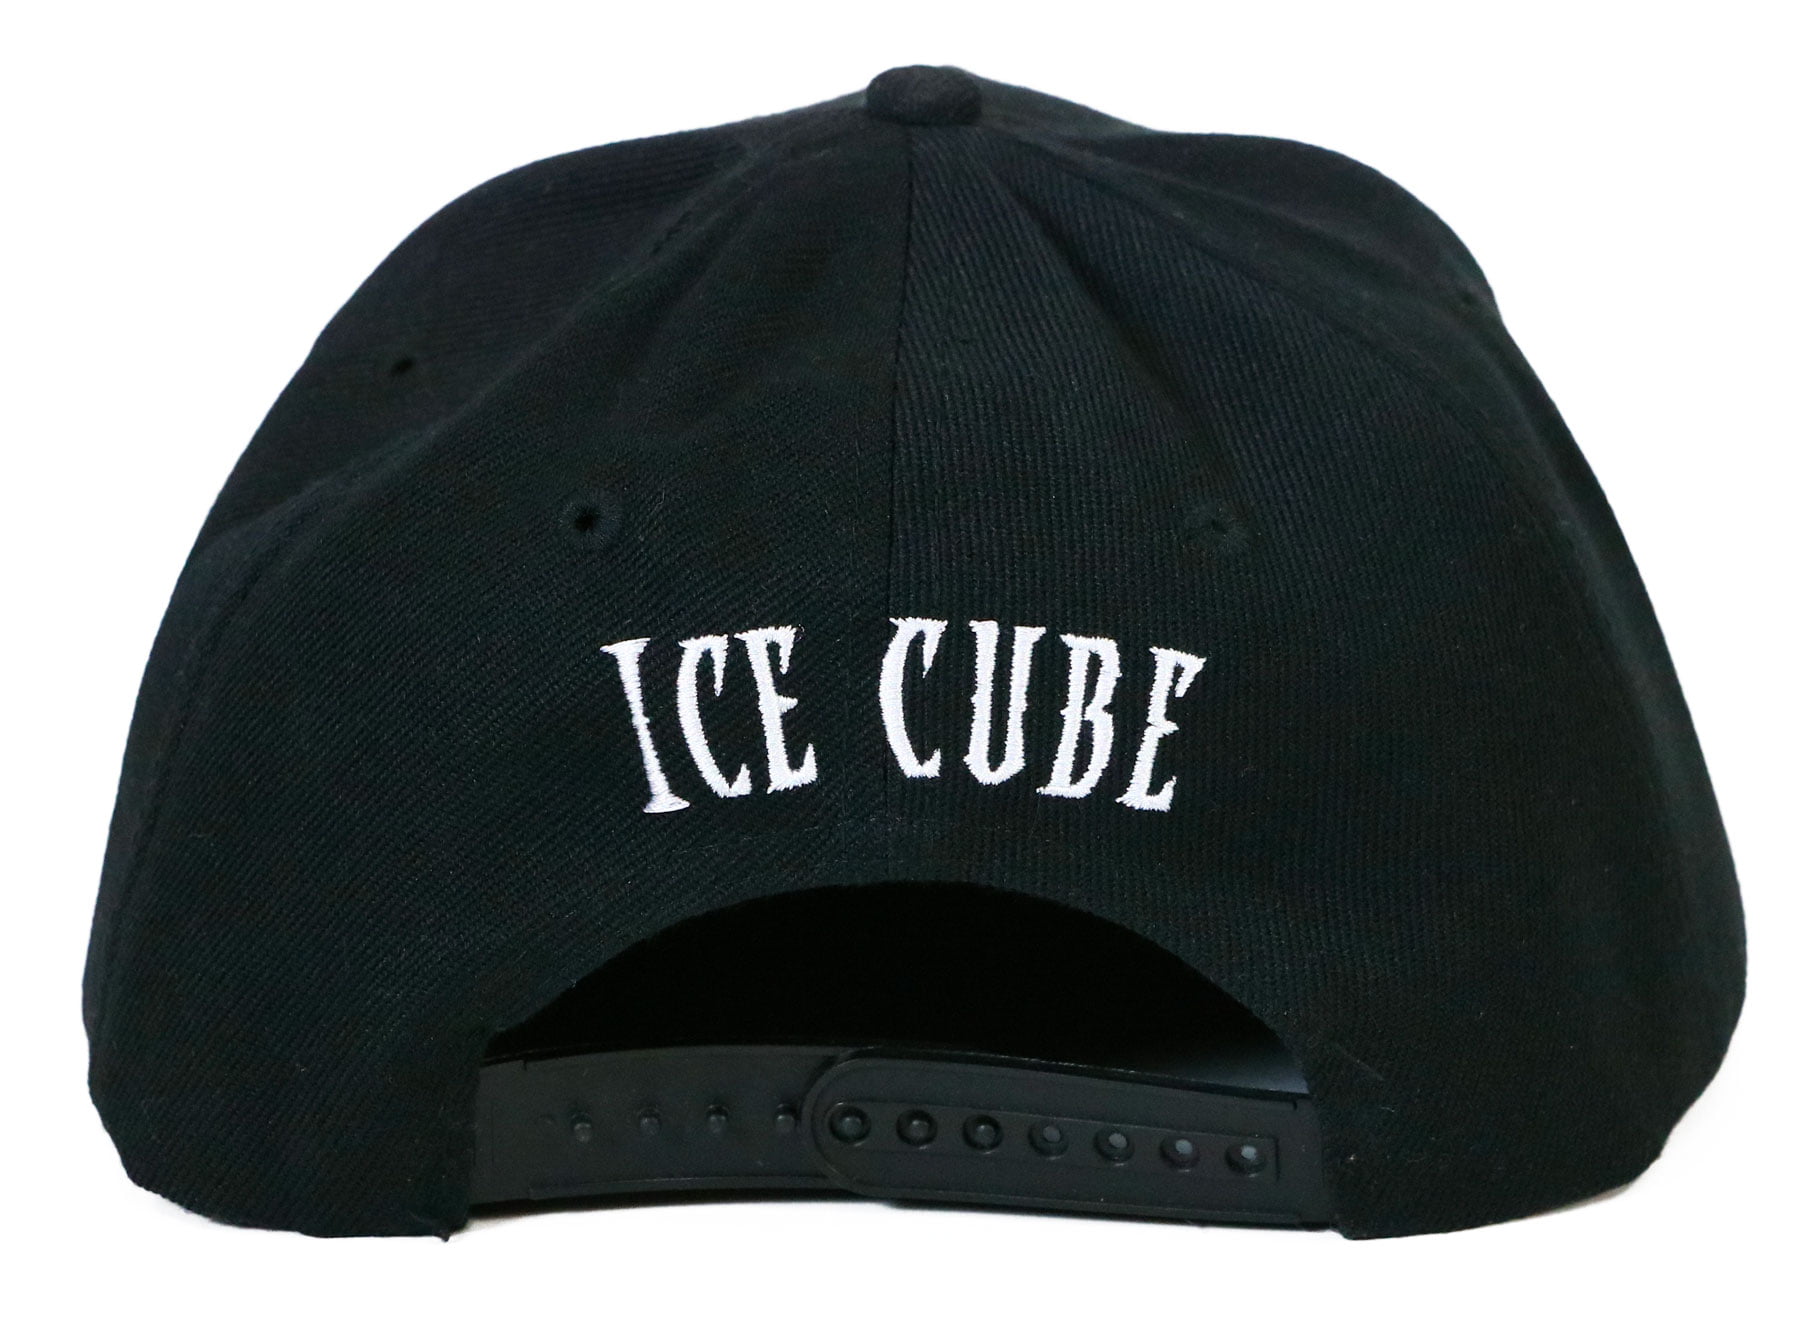 Ice Cube Raider Logo Snapback Fit Hat Black | Licensed Control Industry  Merchandise